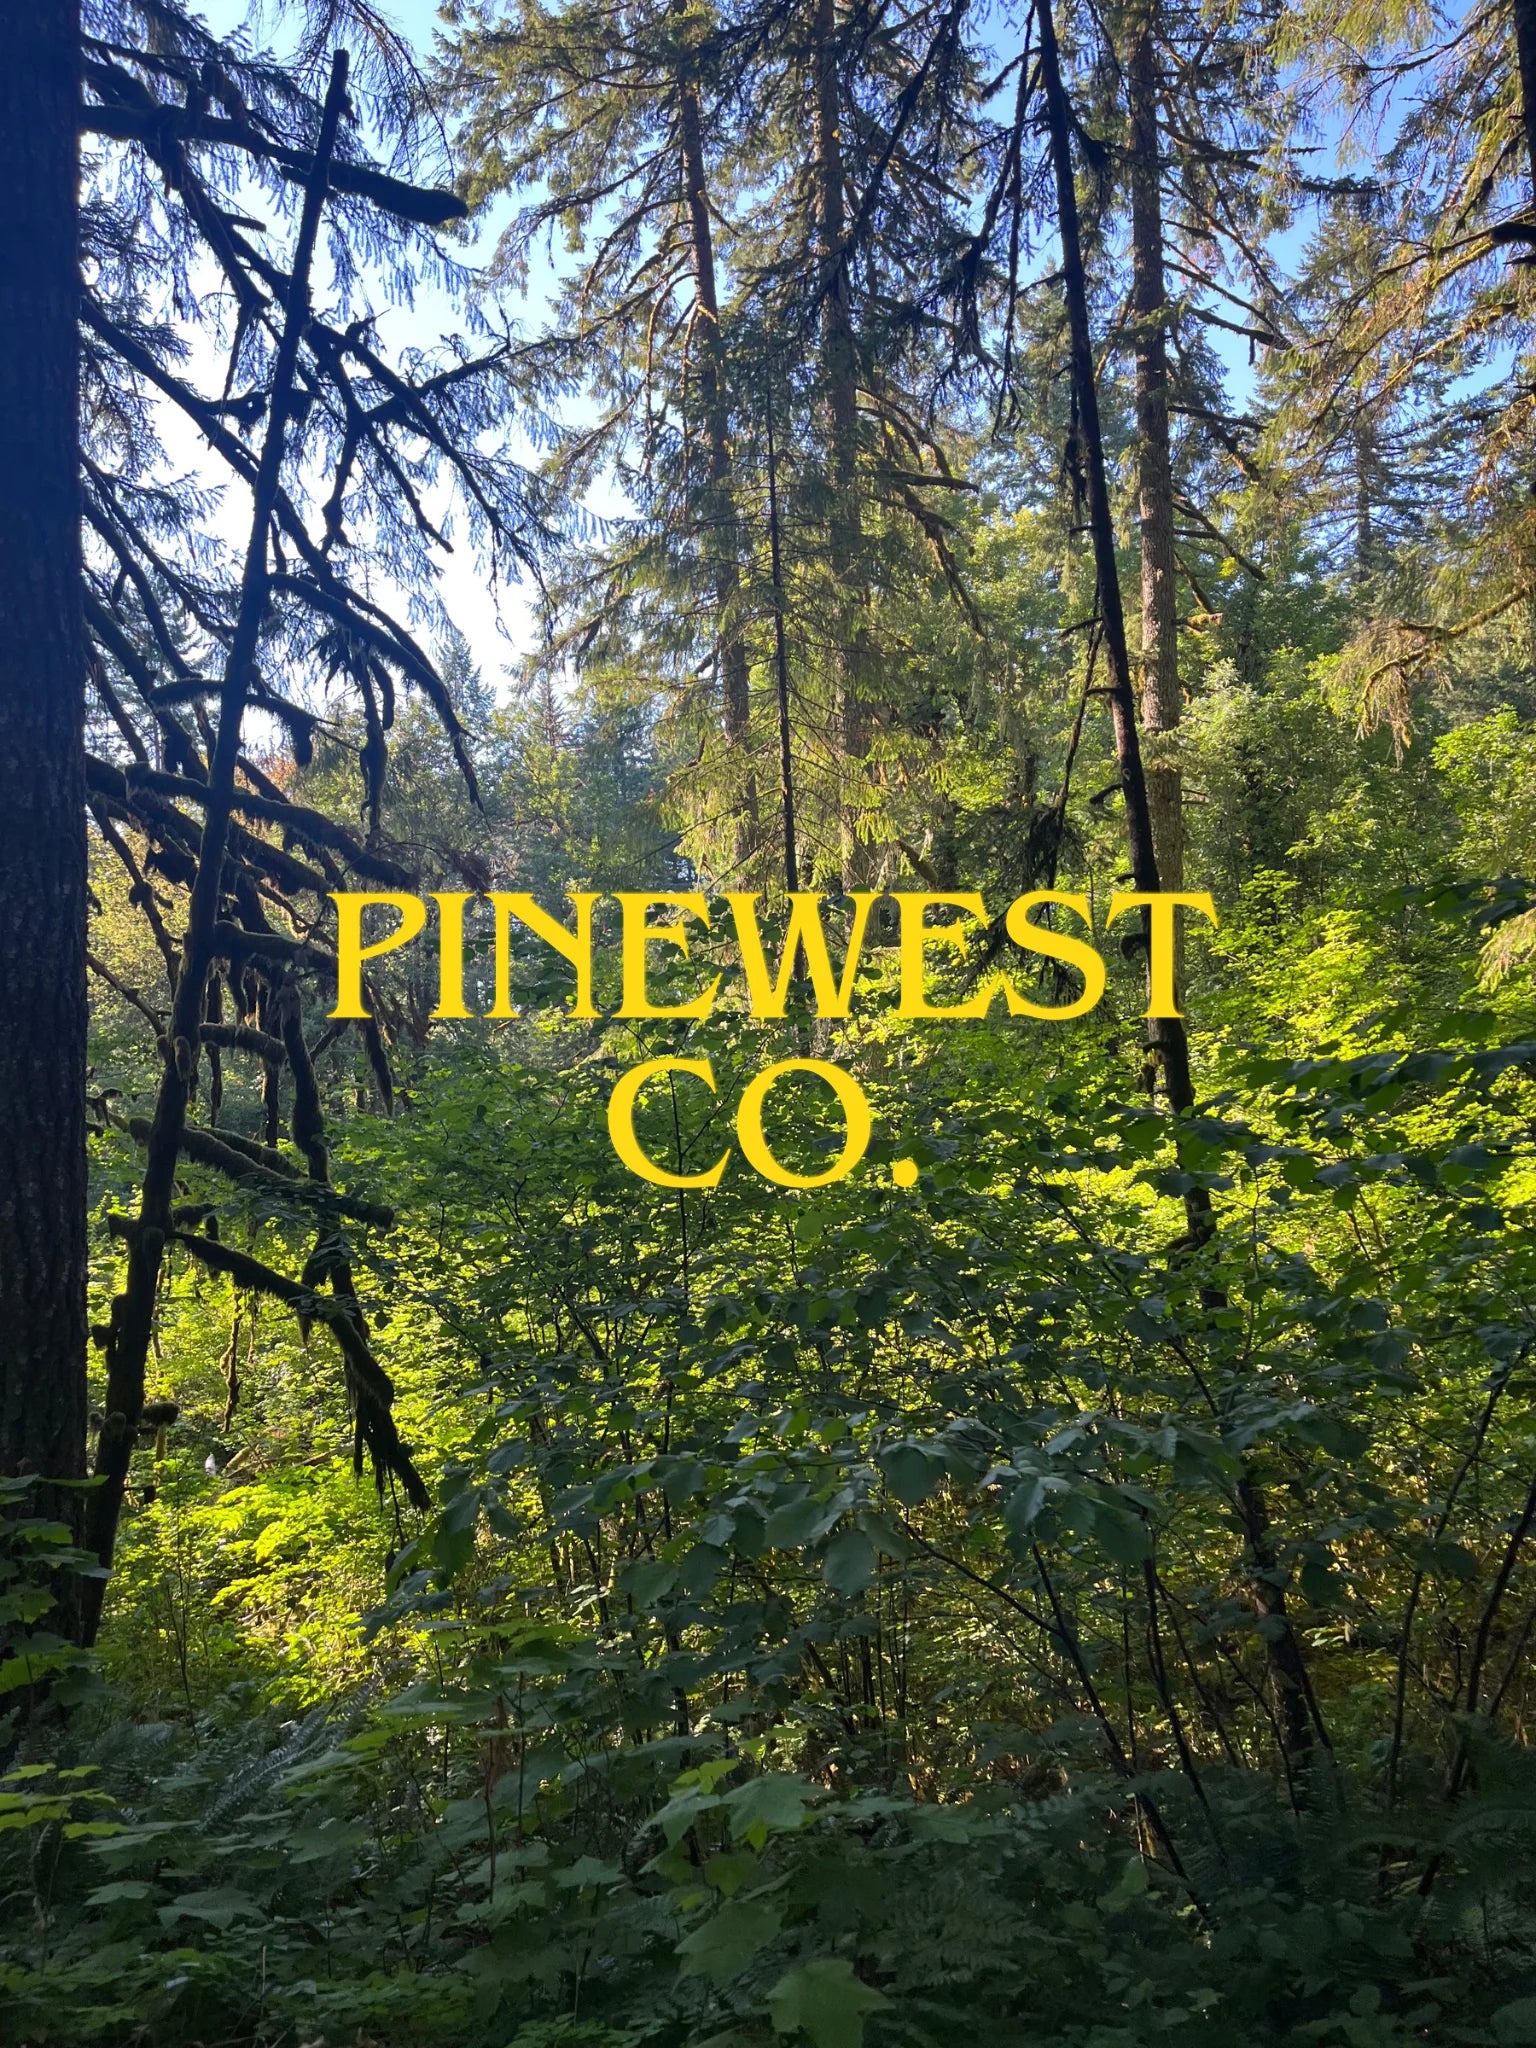 Pine West Co.